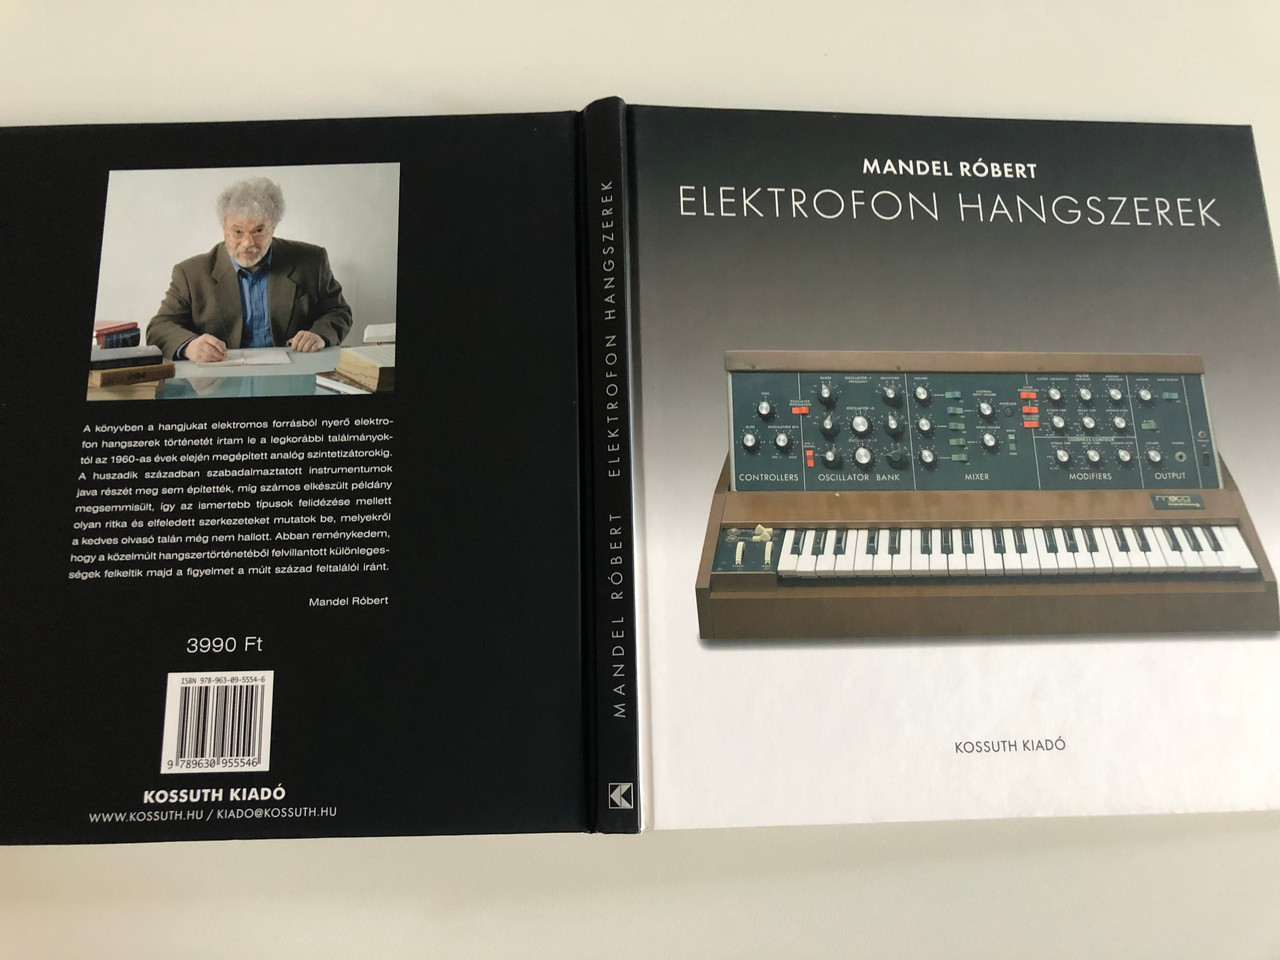 Elektrofon hangszerek / Mandel Róbert / Kossuth Kiadó, 2007 / Hardcover -  bibleinmylanguage